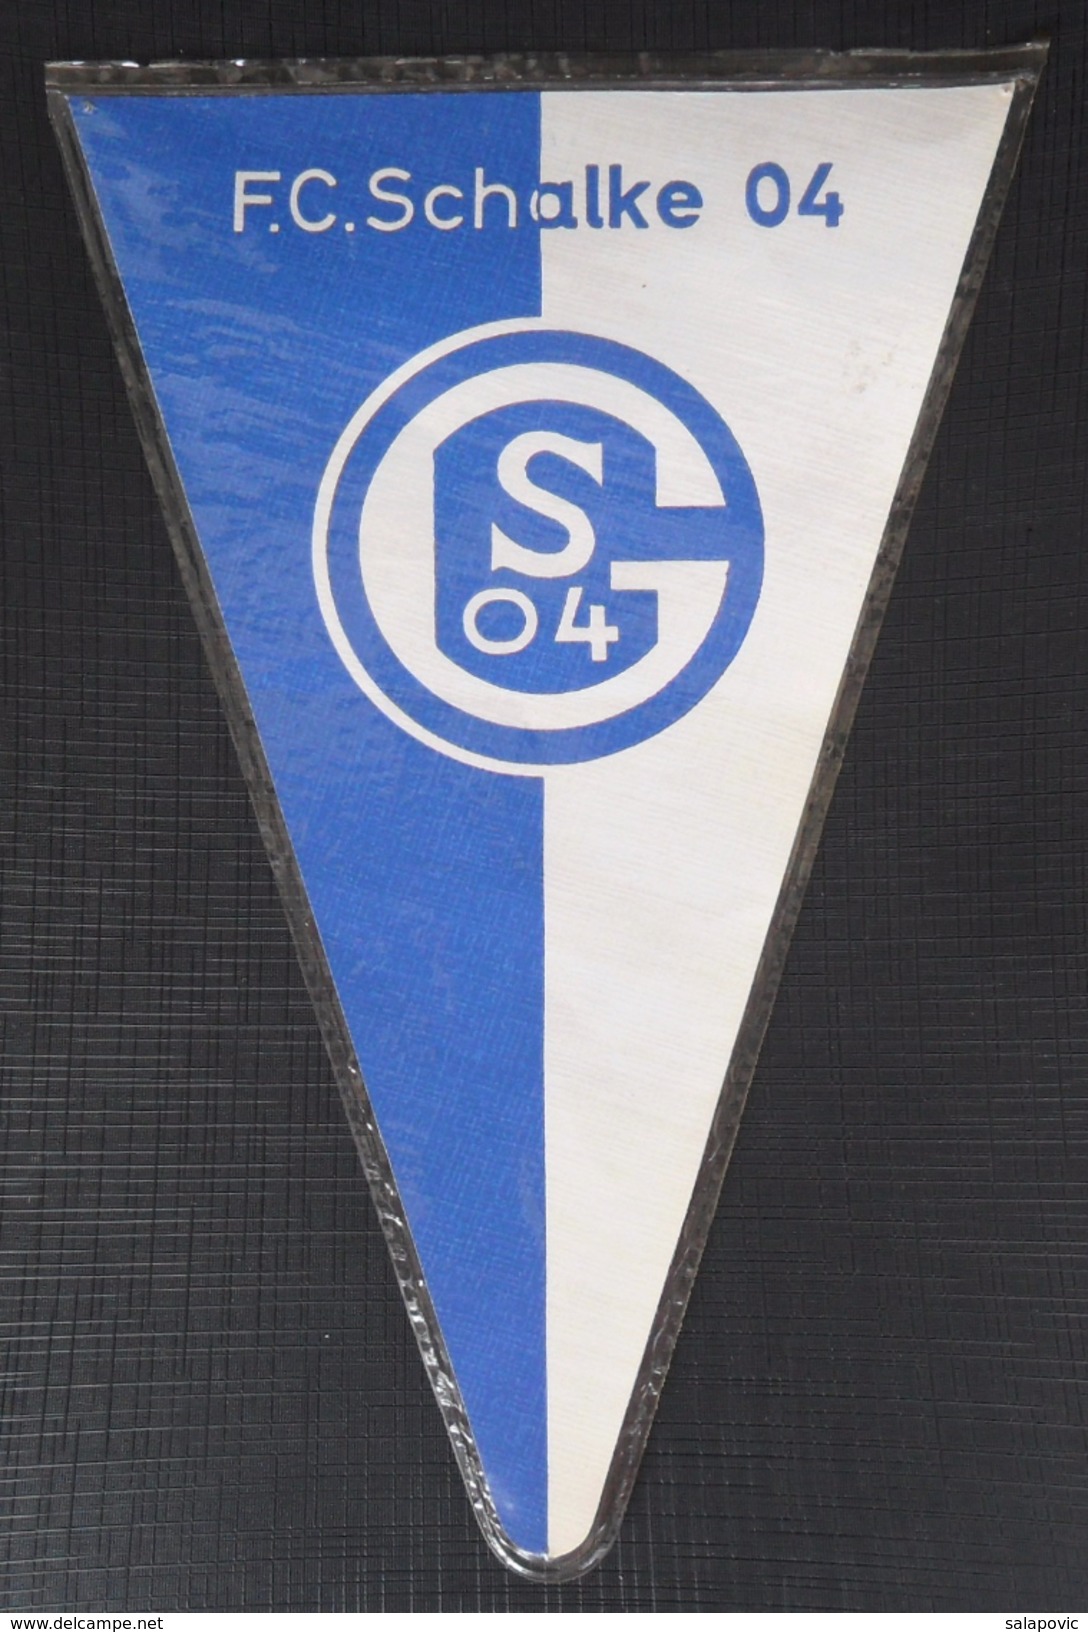 FC Gelsenkirchen-Schalke 04 GERMANY FOOTBALL CLUB, SOCCER / FUTBOL / CALCIO OLD PENNANT, SPORTS FLAG - Abbigliamento, Souvenirs & Varie